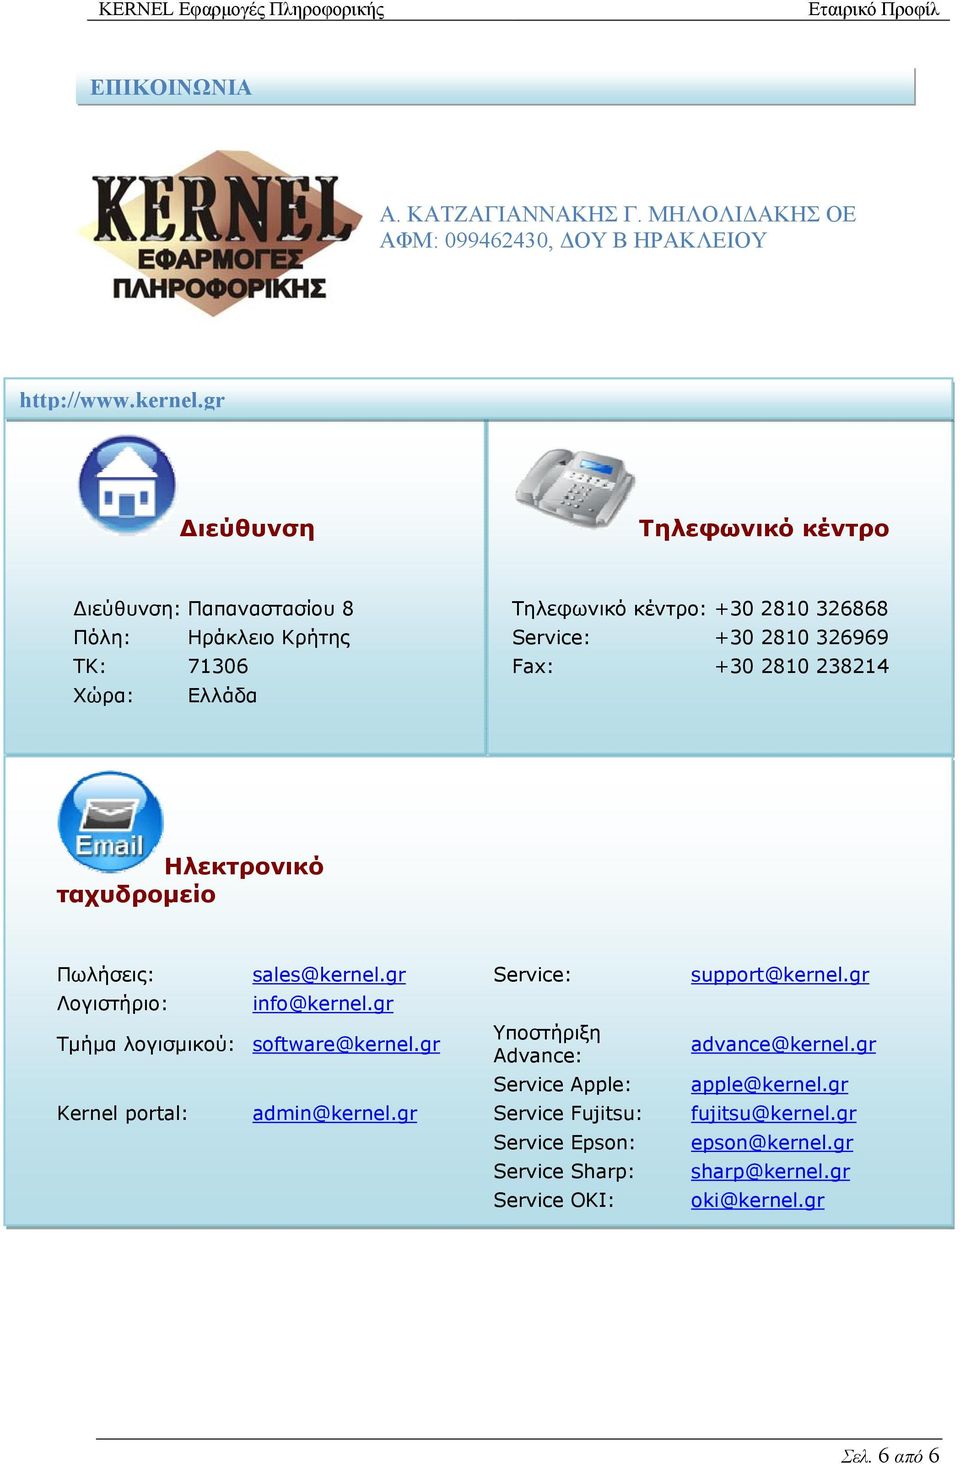 Fax: +30 2810 238214 Ηλεκτρονικό ταχυδρομείο Πωλήσεις: sales@kernel.gr Service: support@kernel.gr Λογιστήριο: info@kernel.gr Τμήμα λογισμικού: software@kernel.